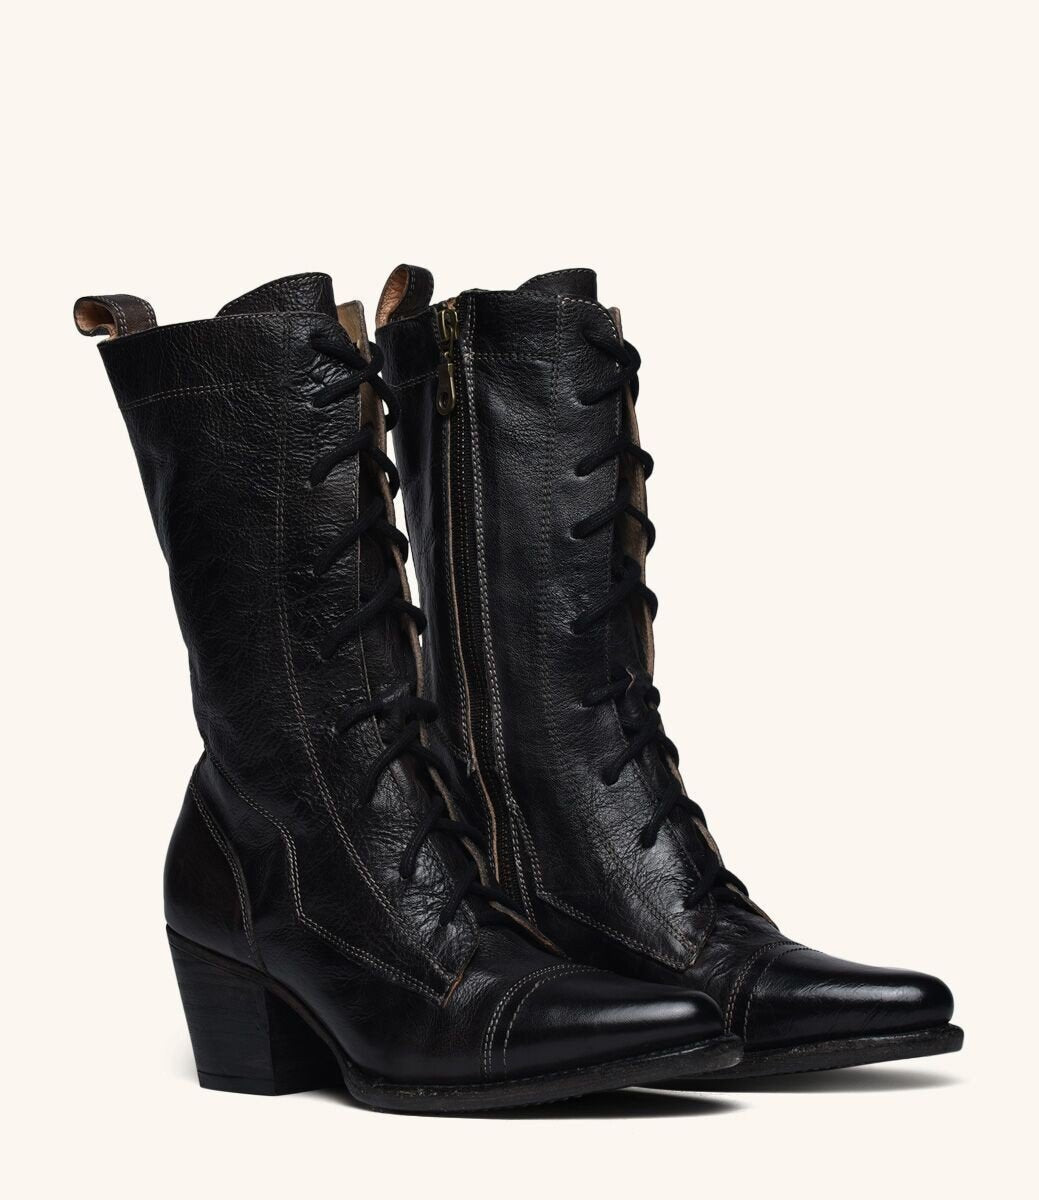 Baisley Modern Vintage Boots in Black Rustic